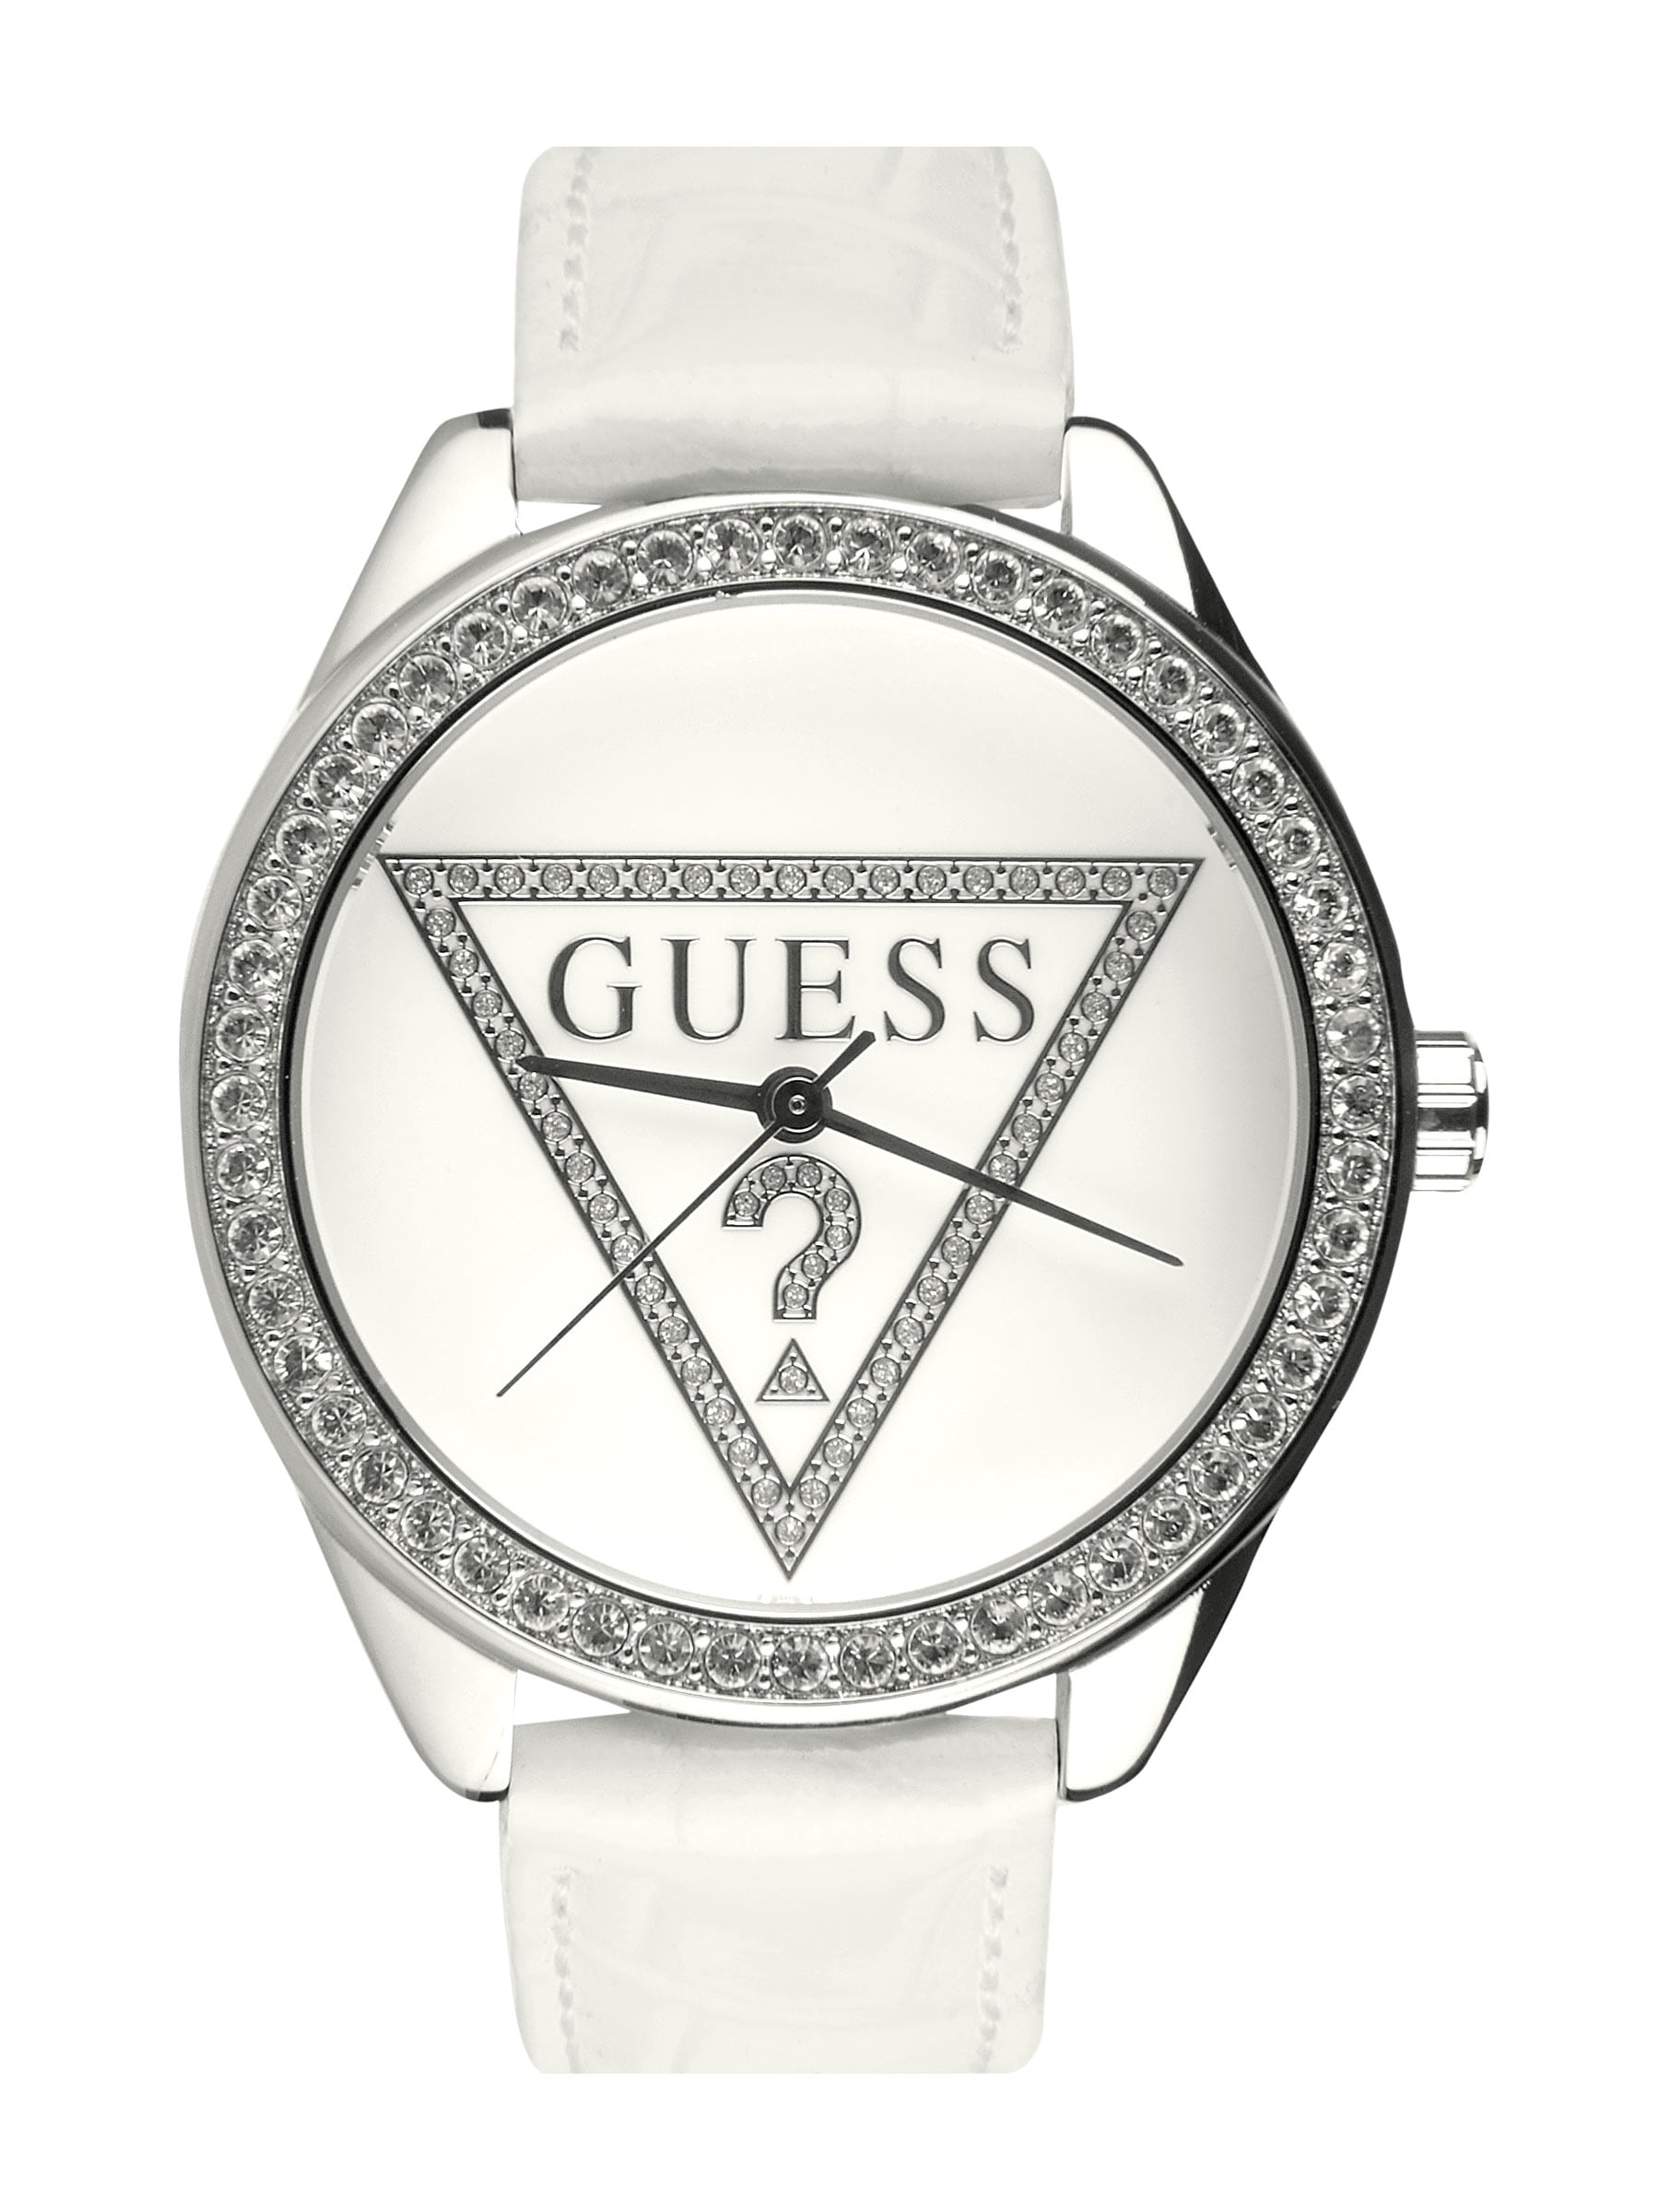 Guess Women Mini Triangle White Dial Watch with Swarovski Elements W65006L1